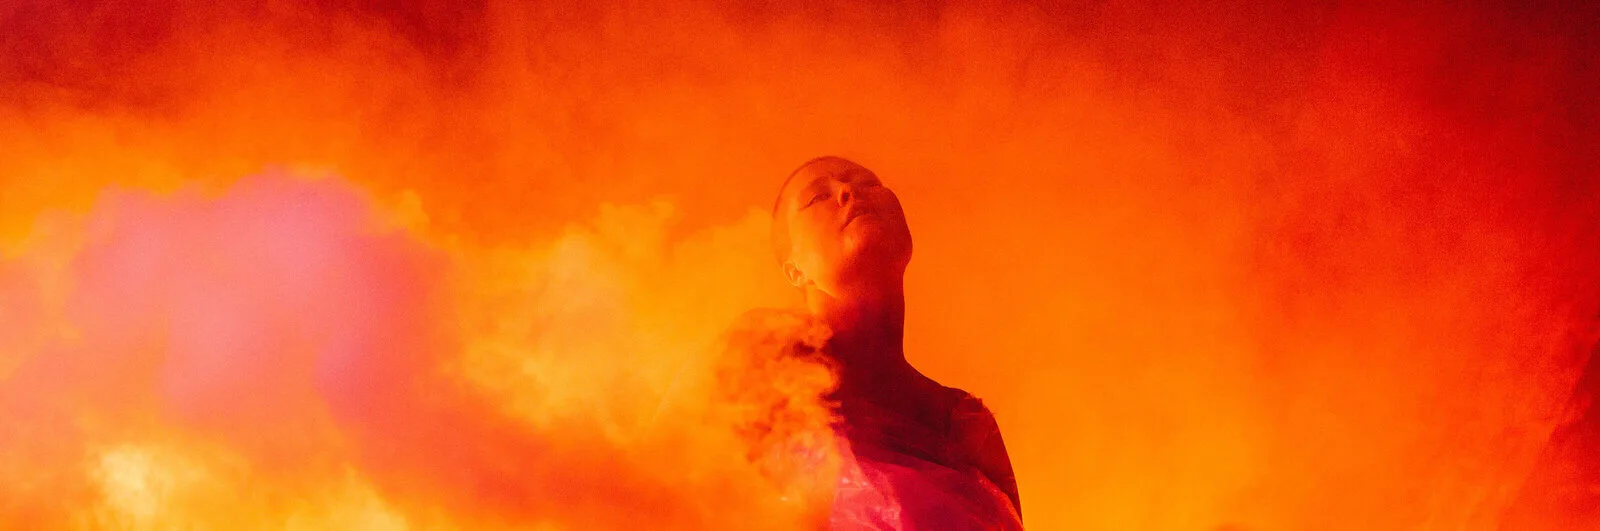 Shambala photo, Livia Rita in orange glow stage lighting with smoke effect, photo credit: George Harrison